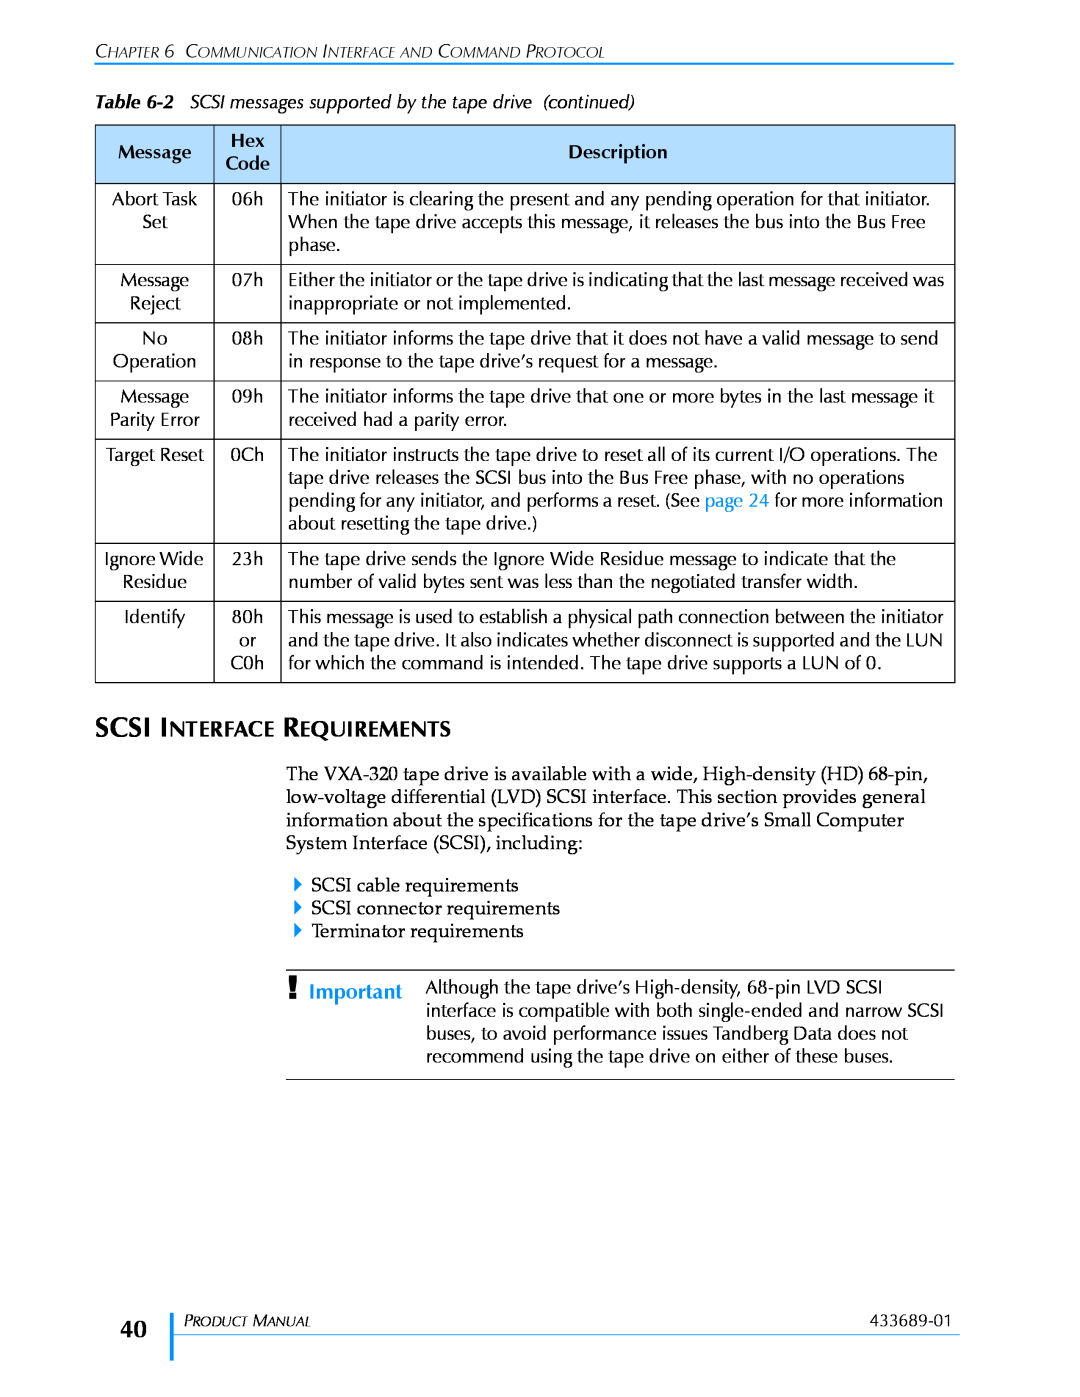 Tandberg Data VXA-320 (VXA-3) manual Scsi Interface Requirements, Message, Description 